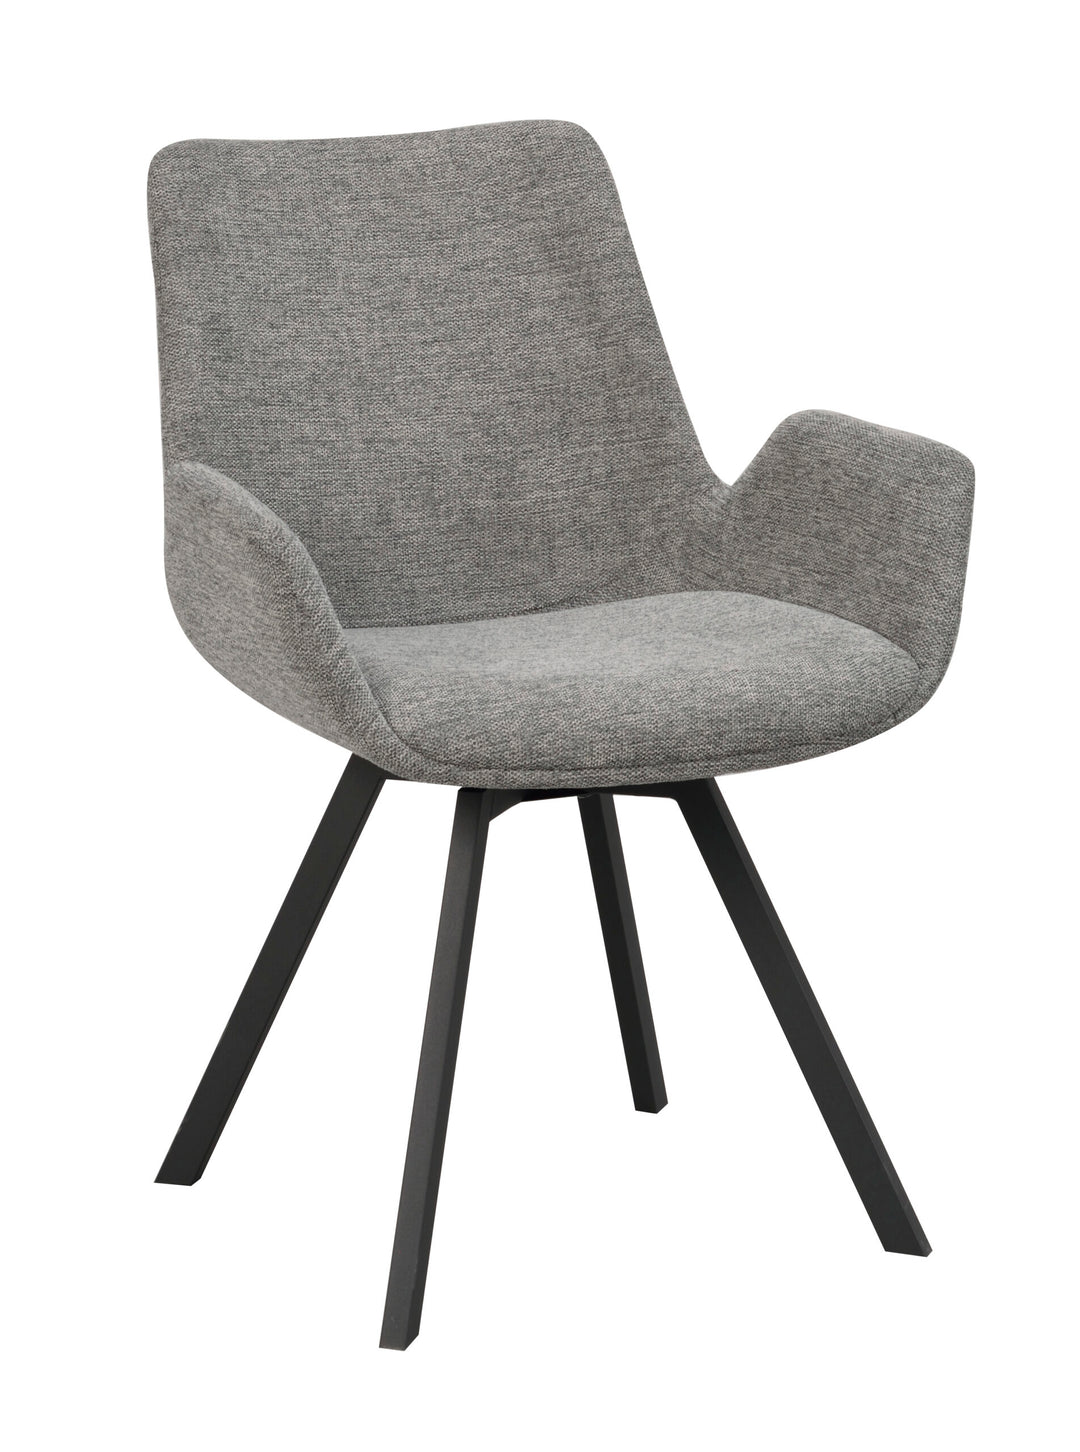 110530_b, Norwell swivel chair, grey_black